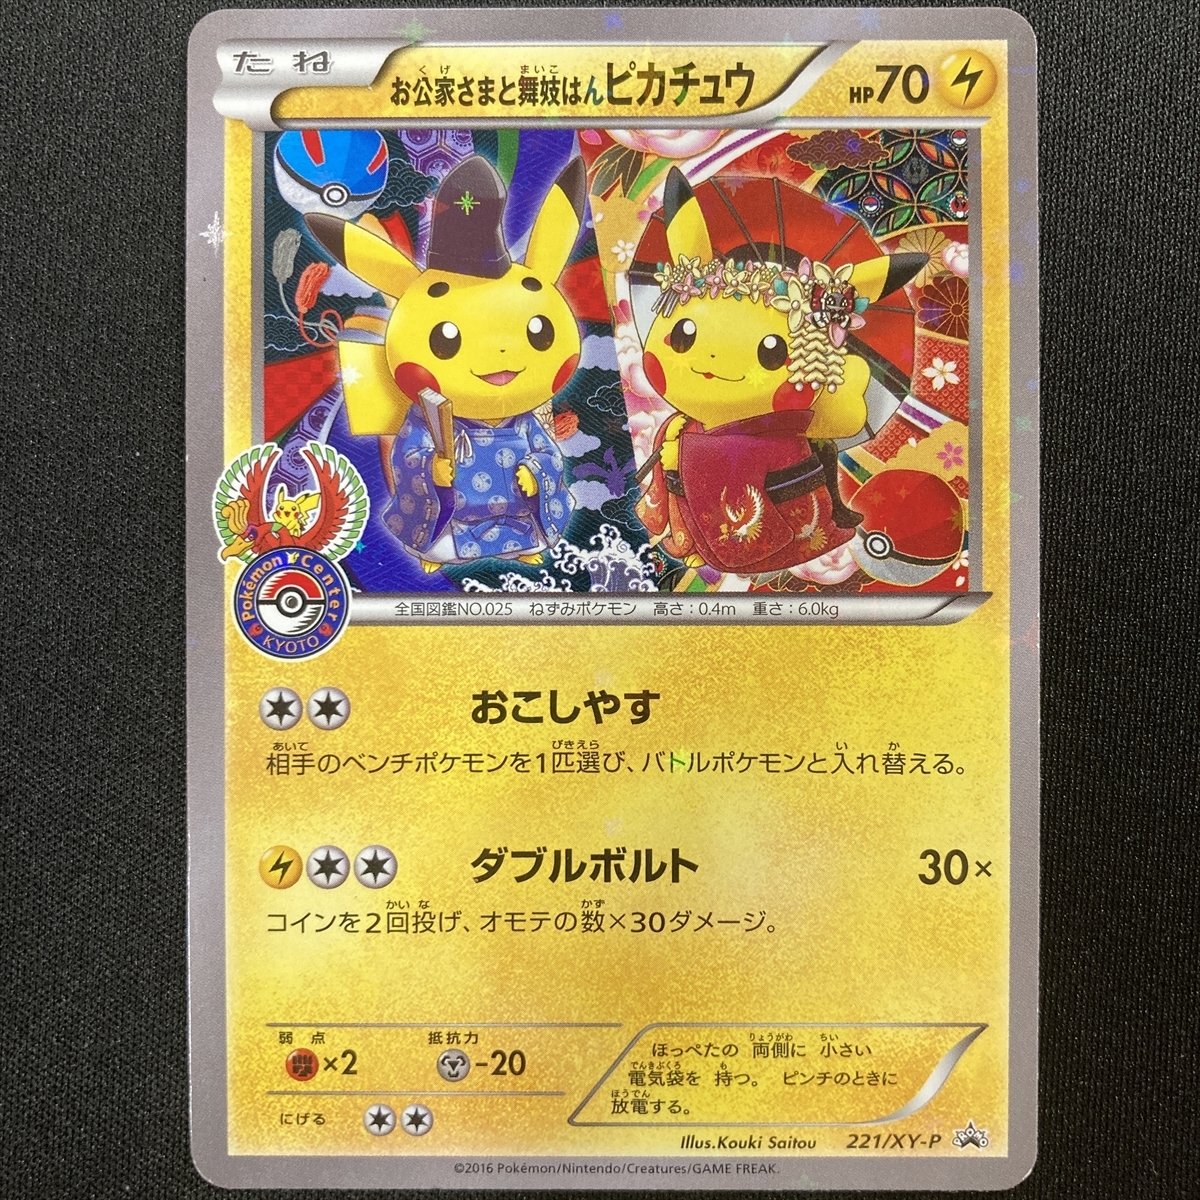 Kuge Maiko Pikachu 221/XY-P Pokemon Card Pokemon Centre Kyoto Promo お公家さまと舞妓はんピカチュウ ポケモン カード プロモ 210721